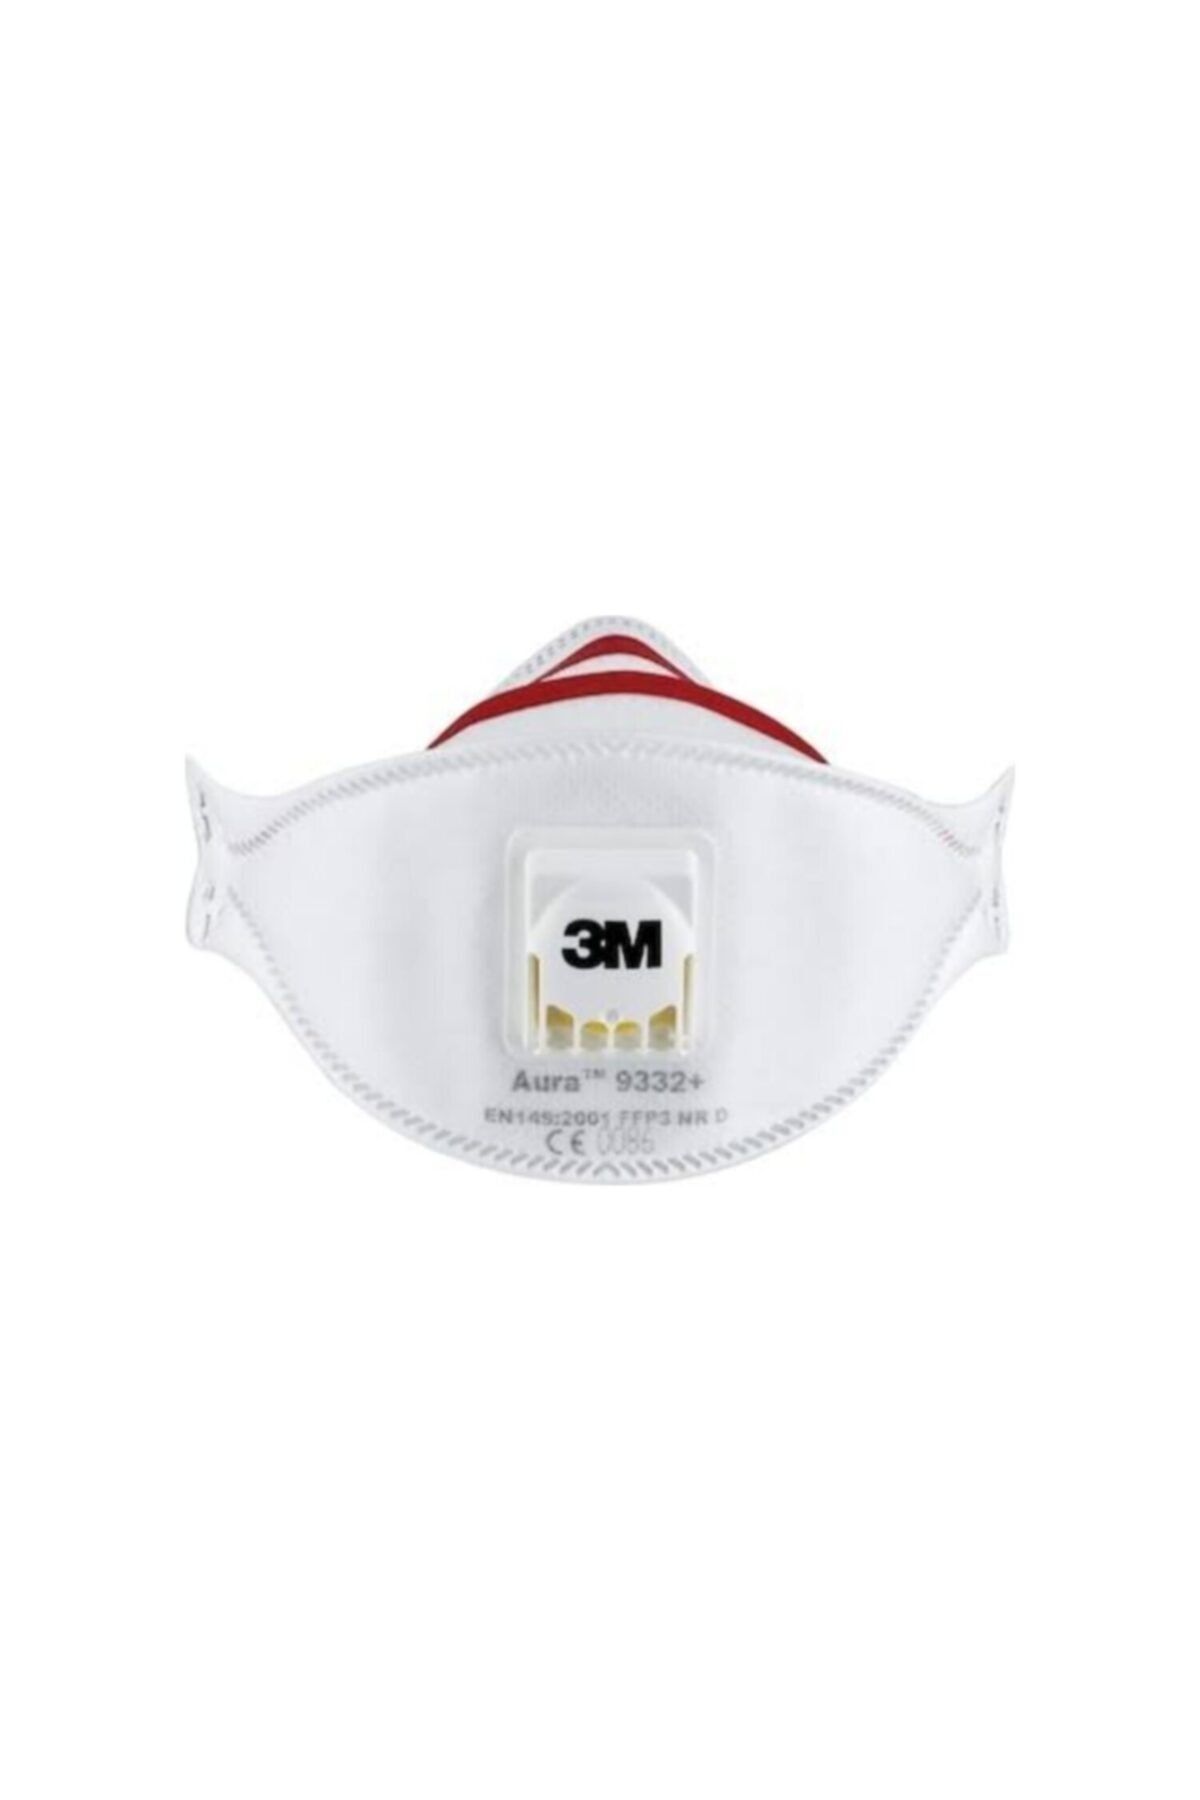 3M Ffp3 9332+ Ventilli Maske